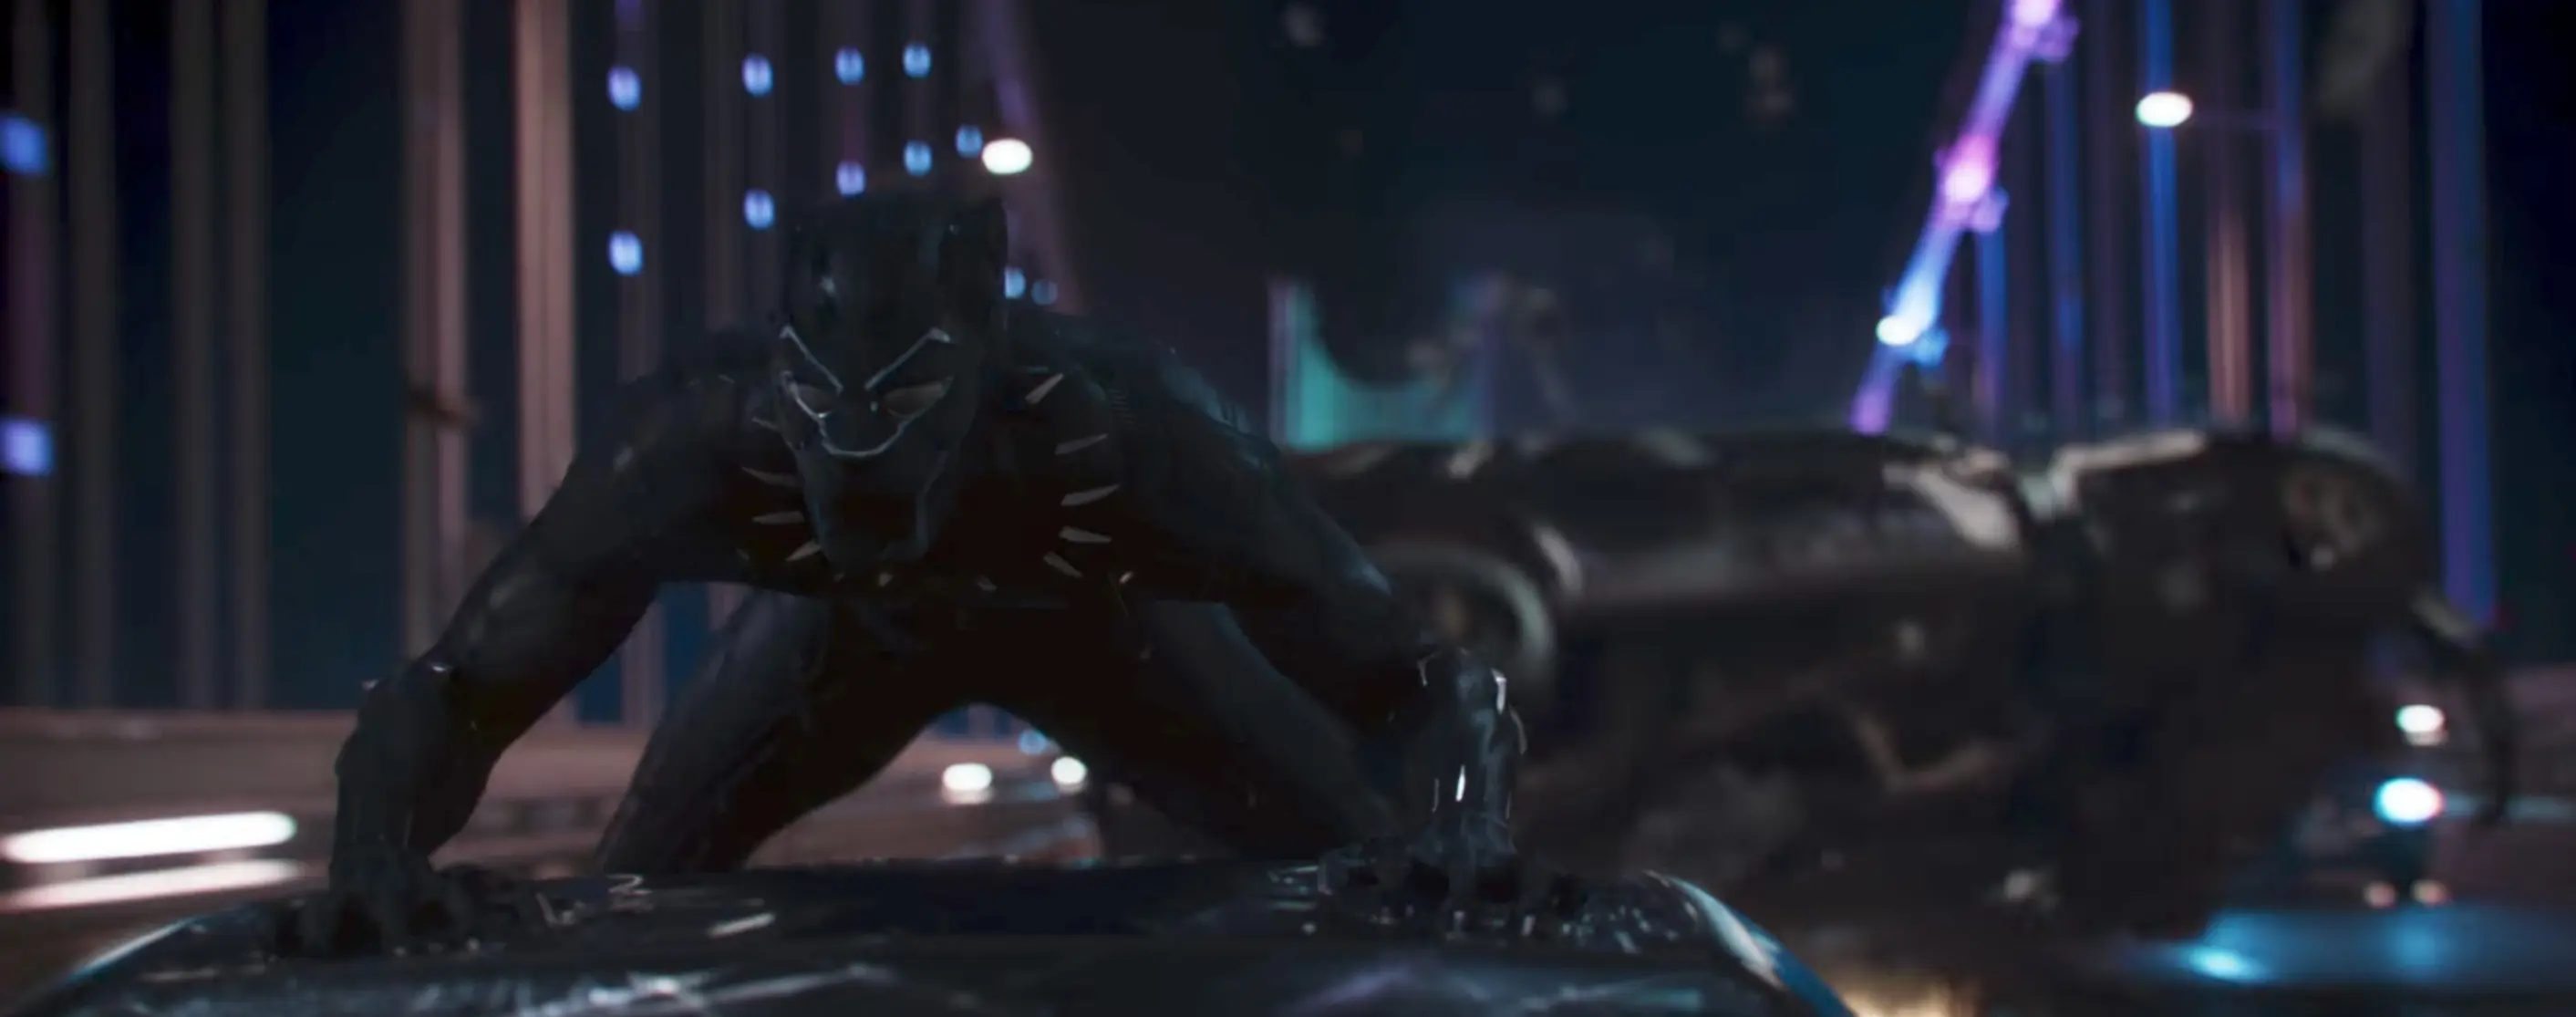 Black Panther. (Marvel Studios / Walt Disney Studios Motion Pictures)